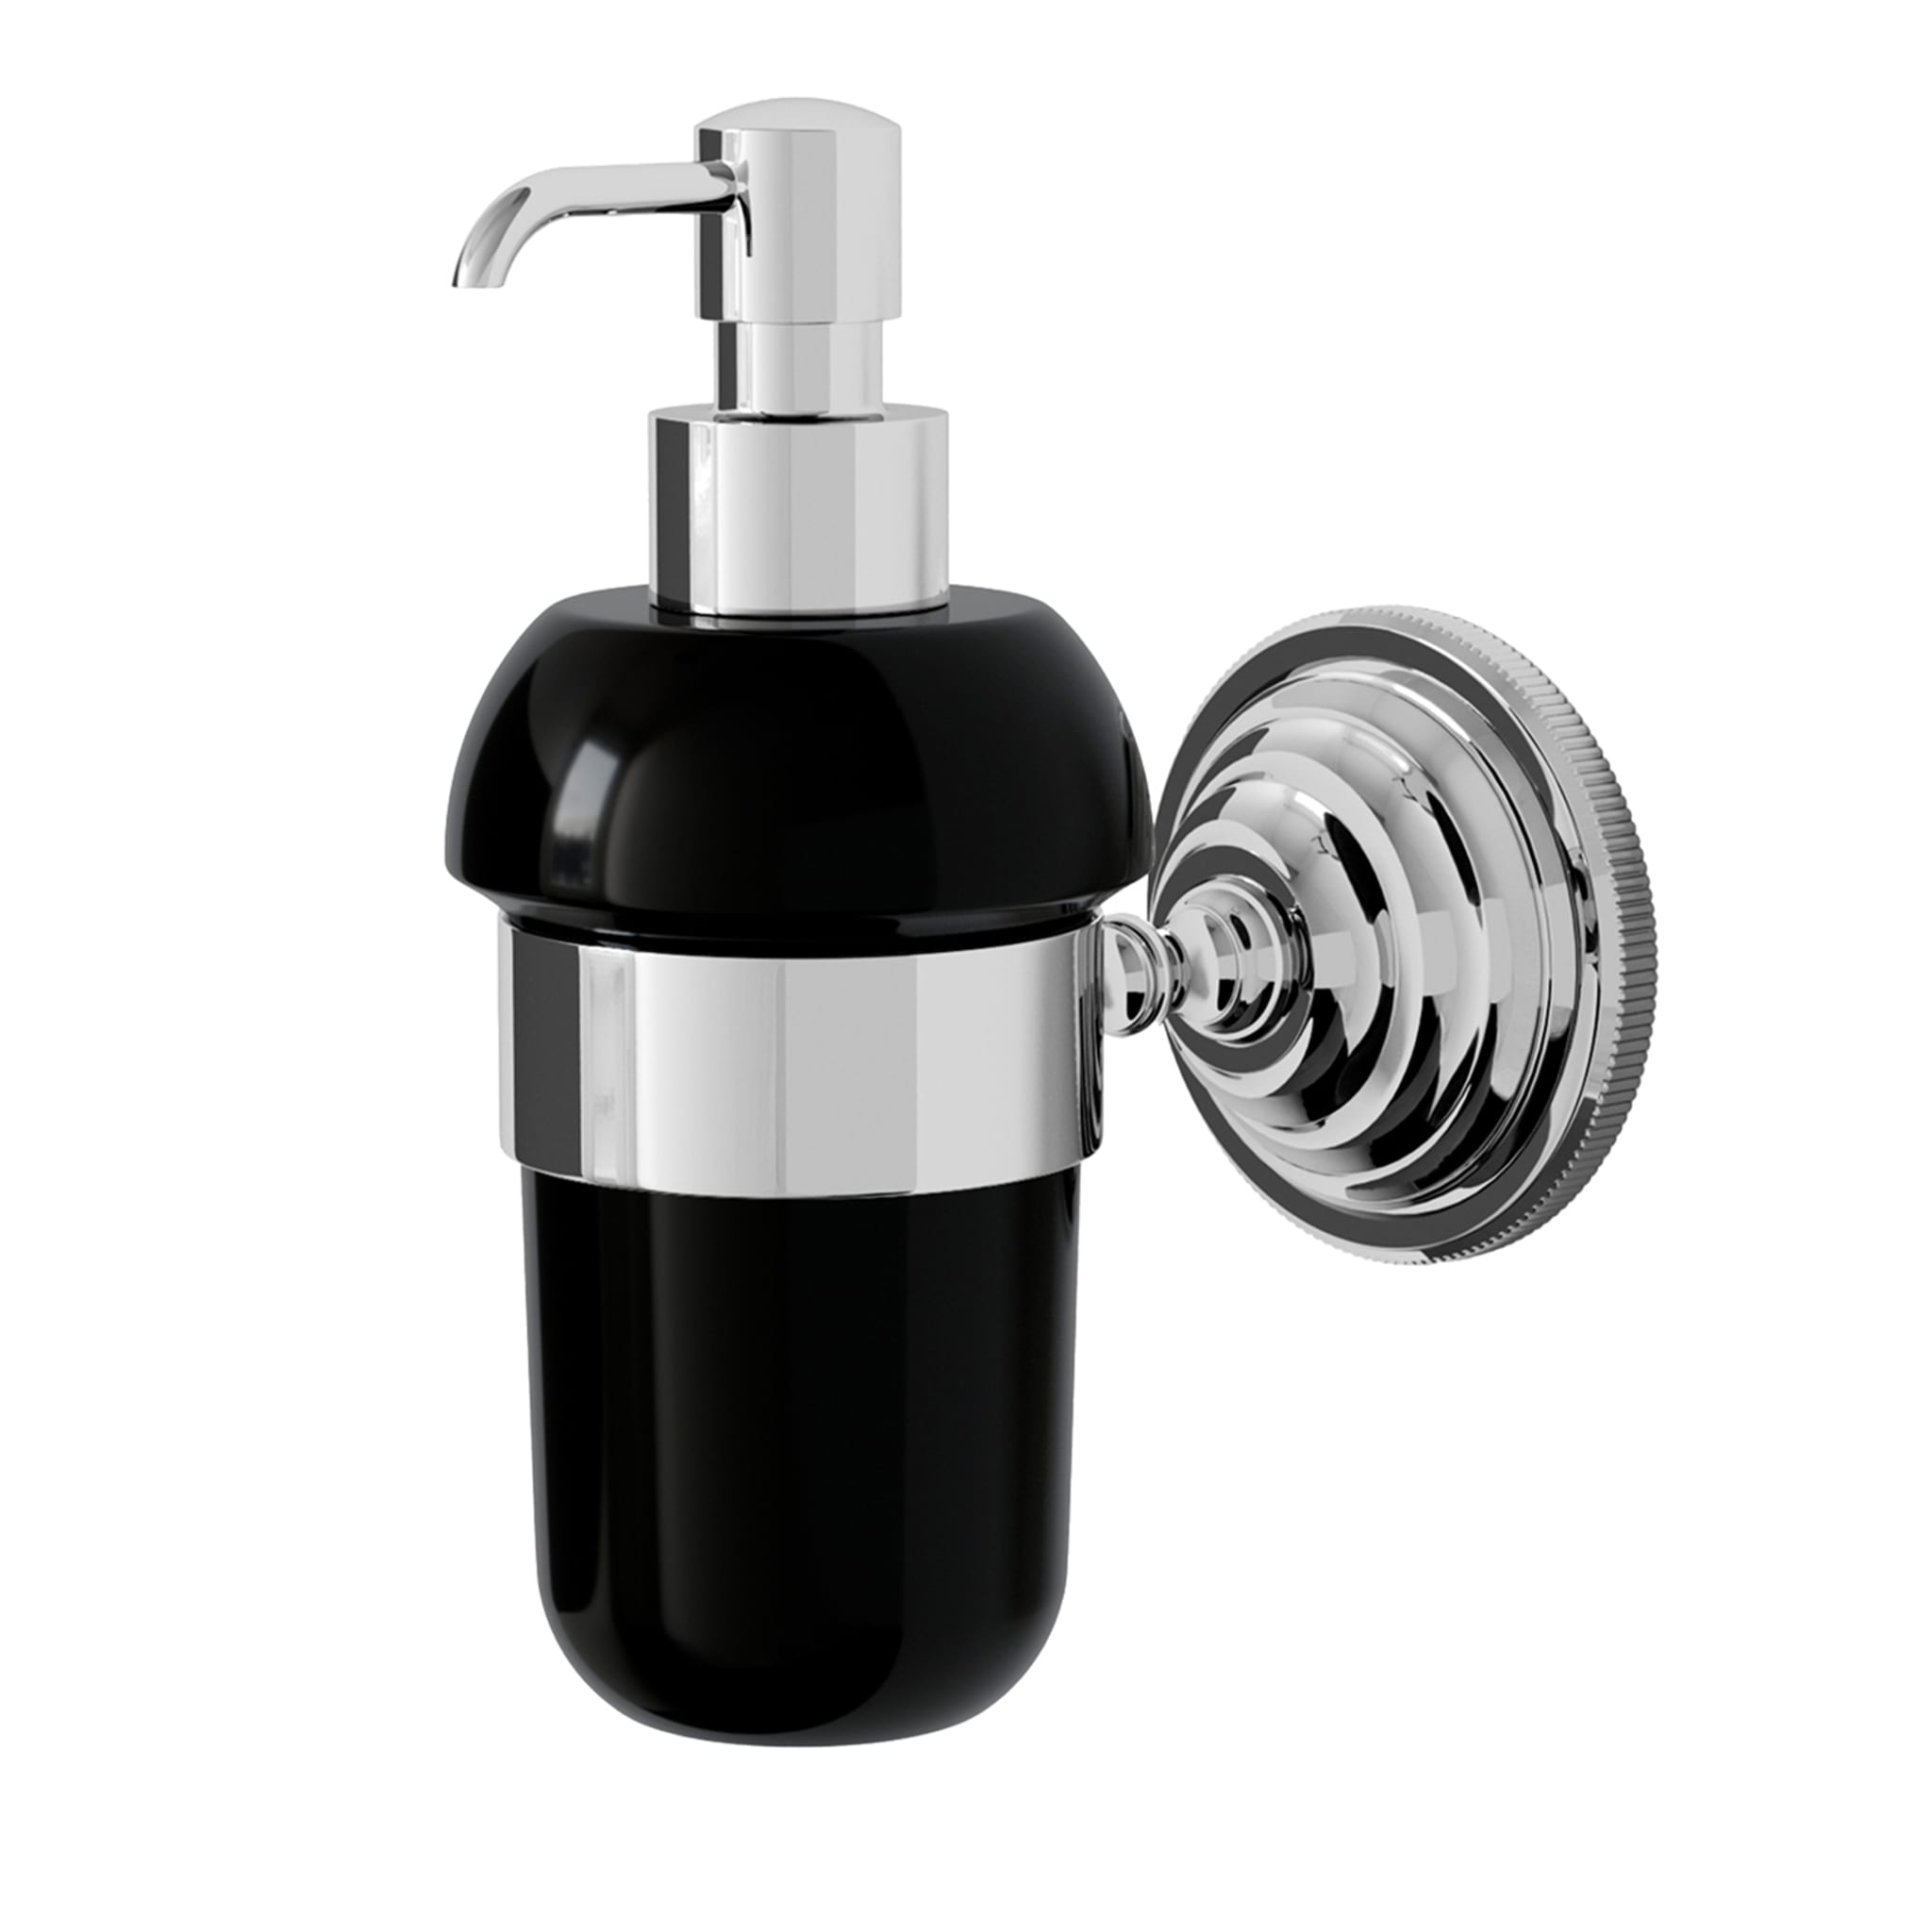 Black Diamond Soap Dispenser - Main view